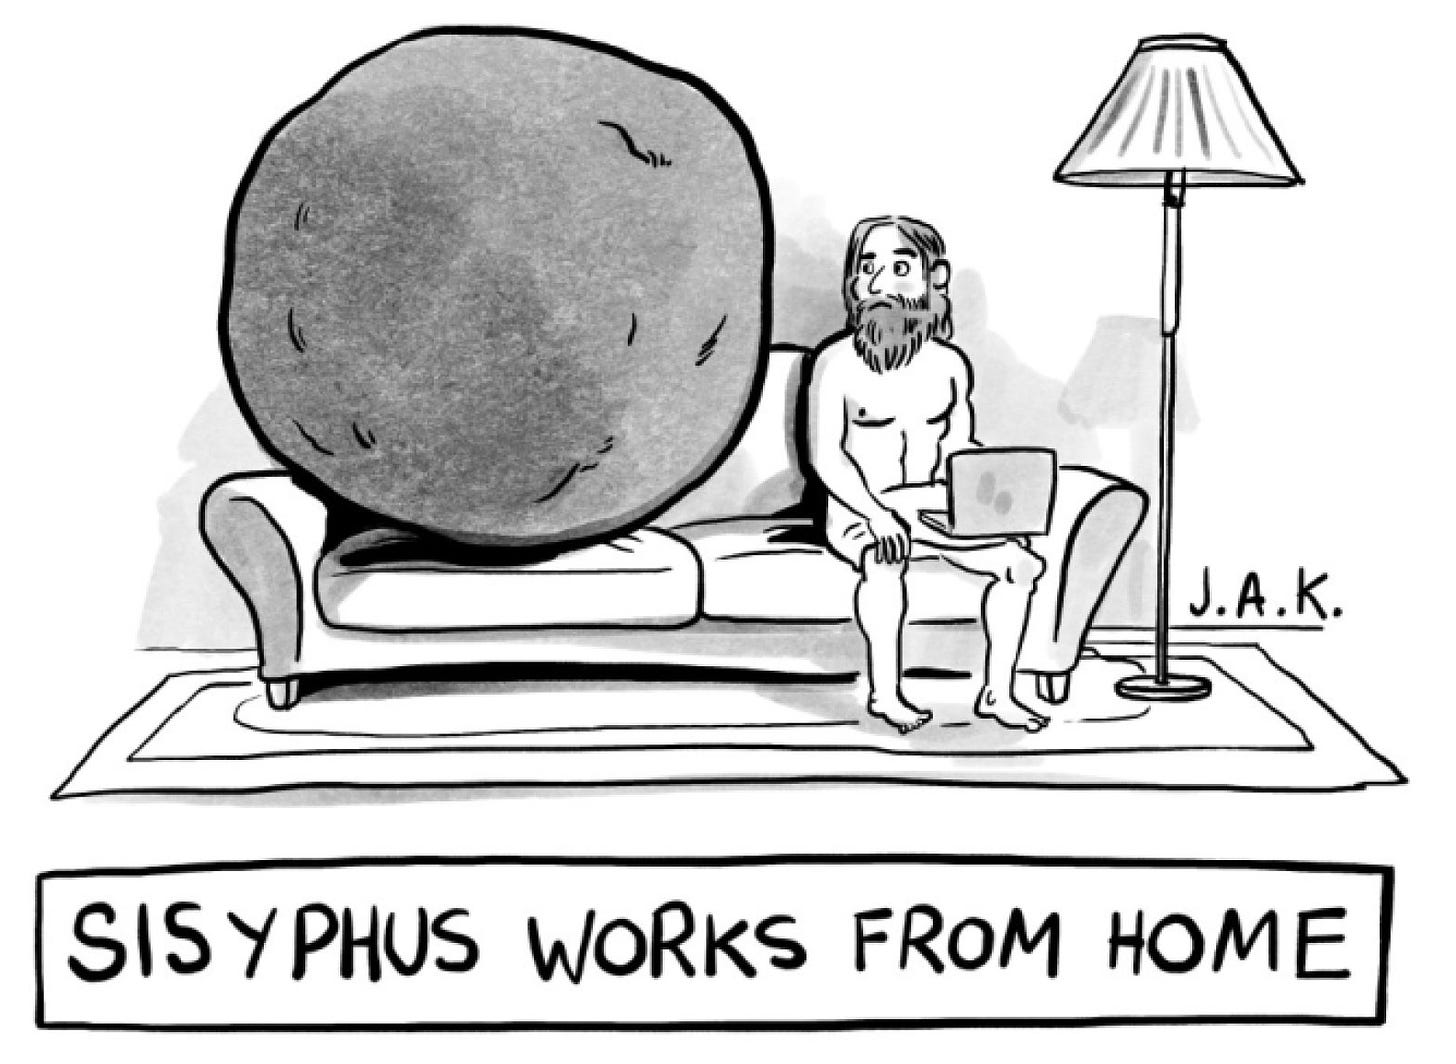 SISYPHUS WORKS FROM HOME